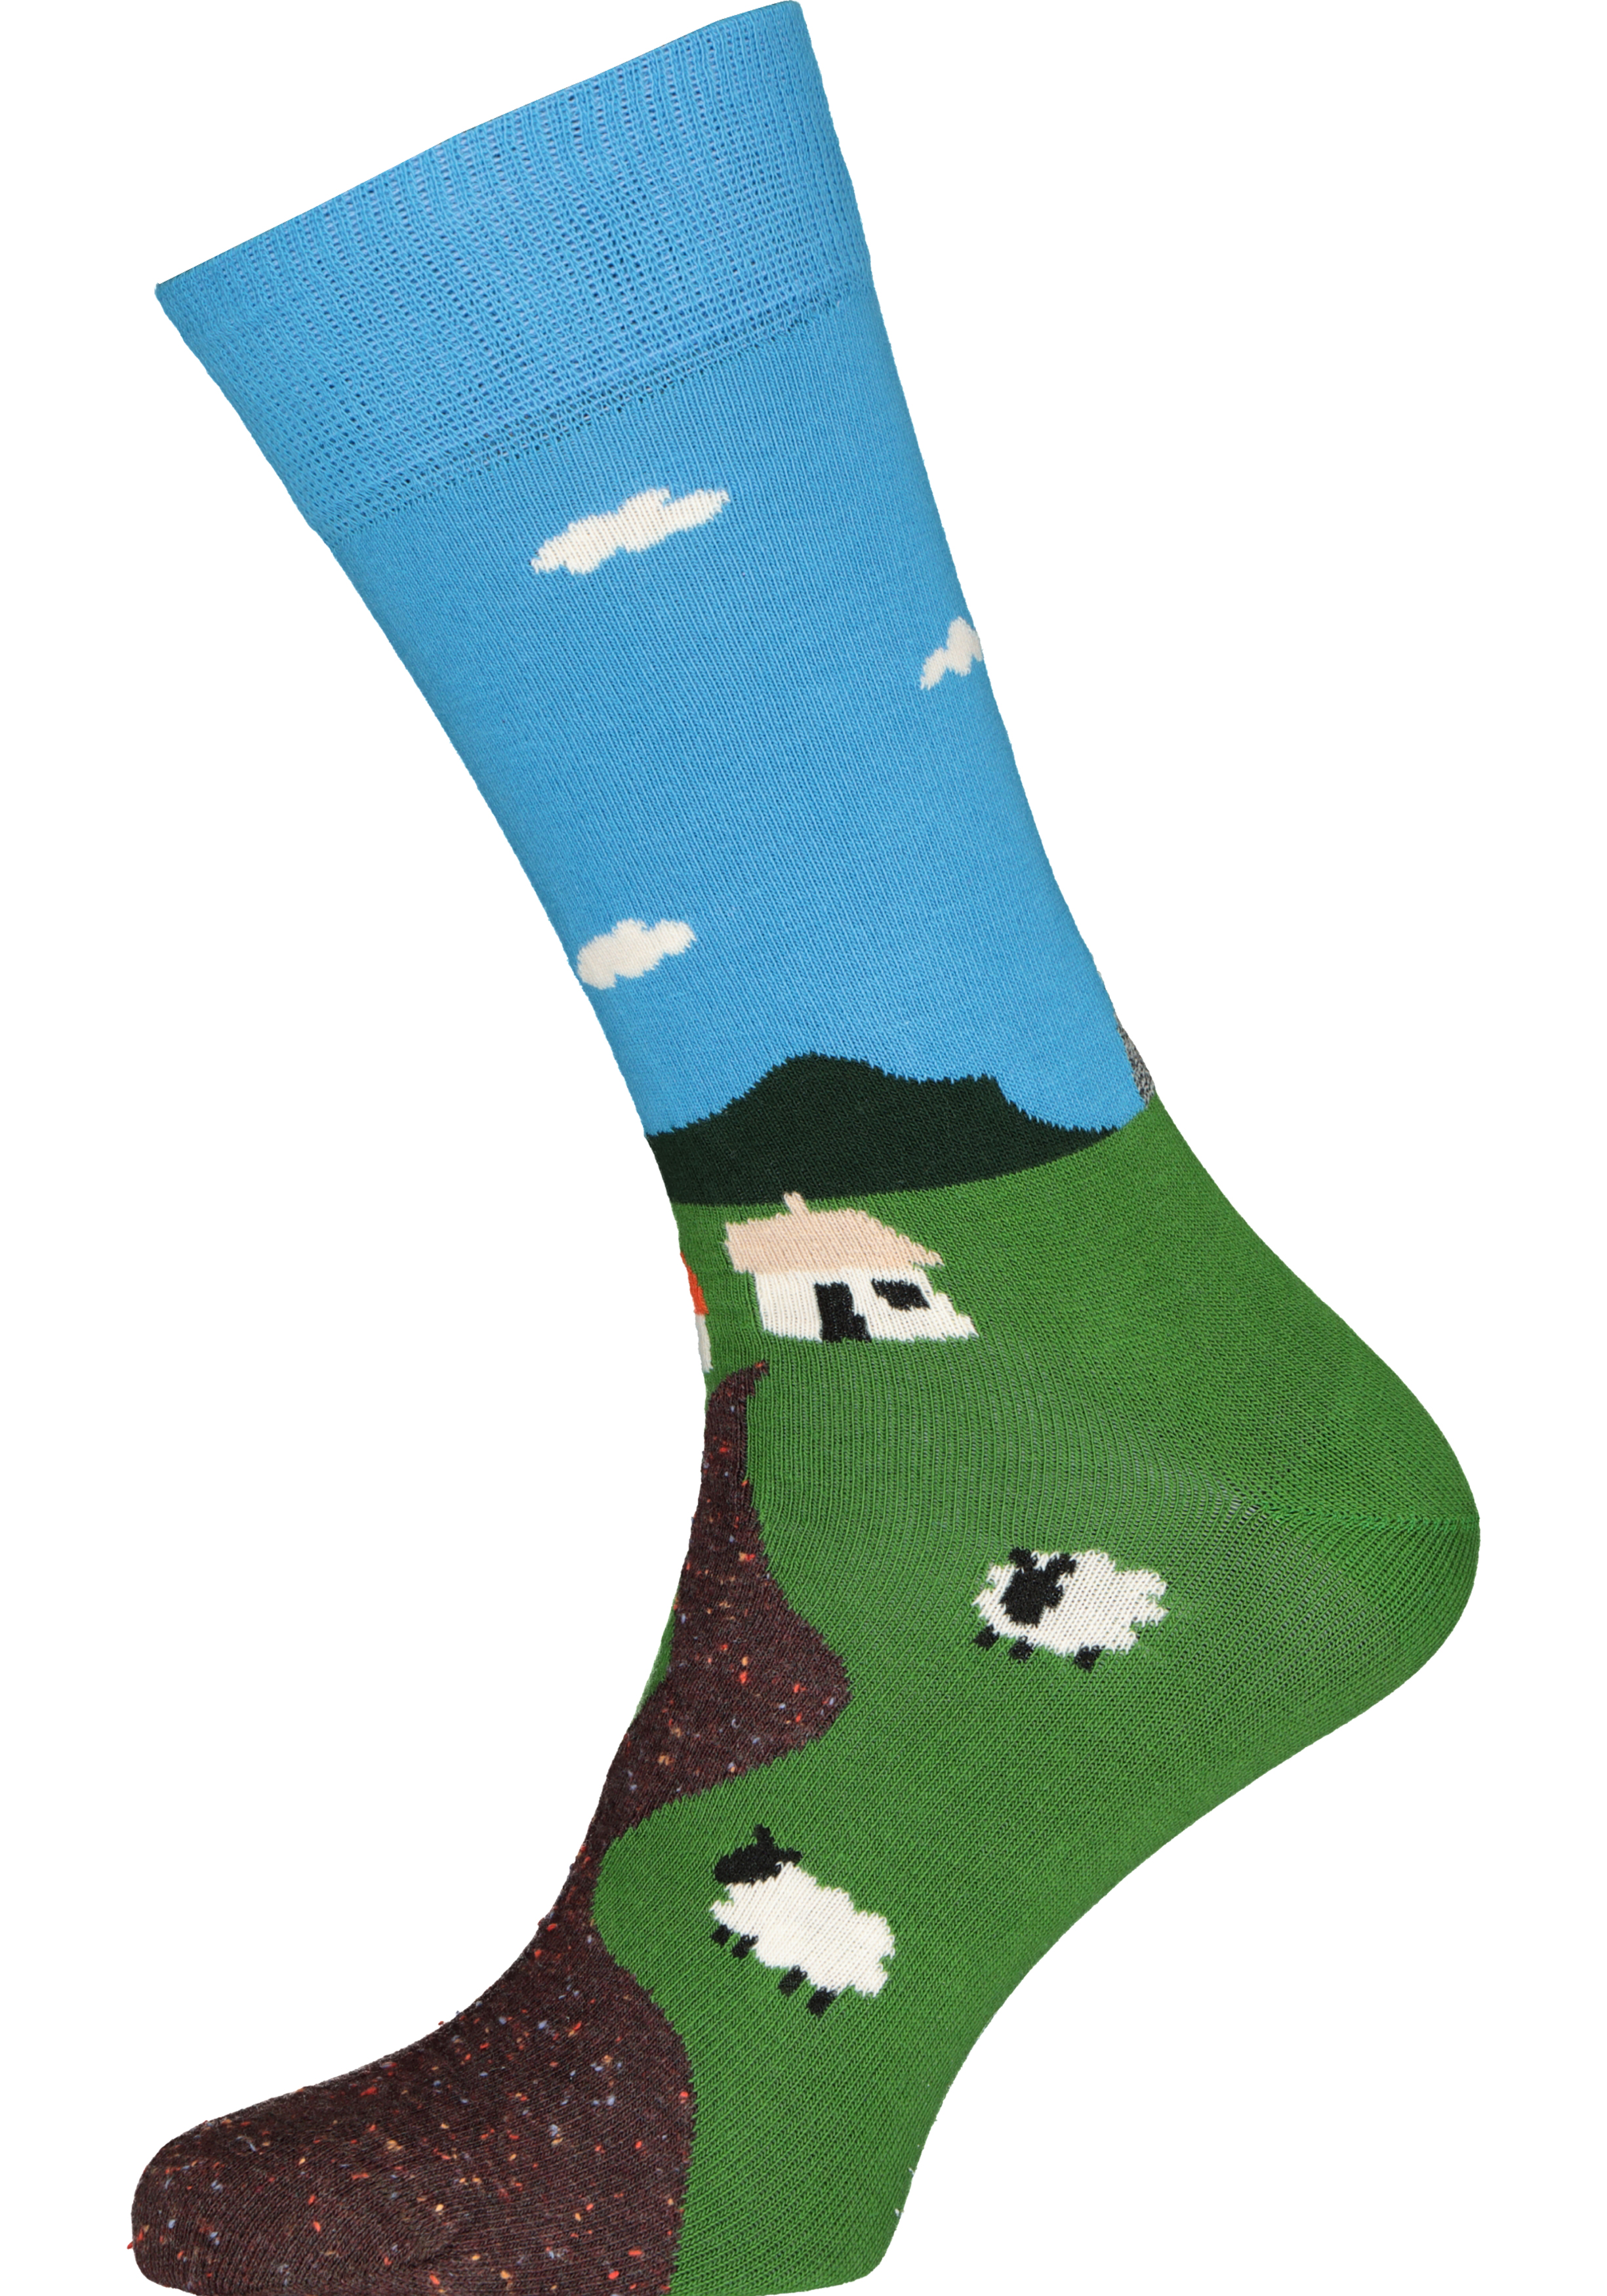 Happy Socks Little House On The Moorland Sock, unisex sokken, groen met blauw landschap